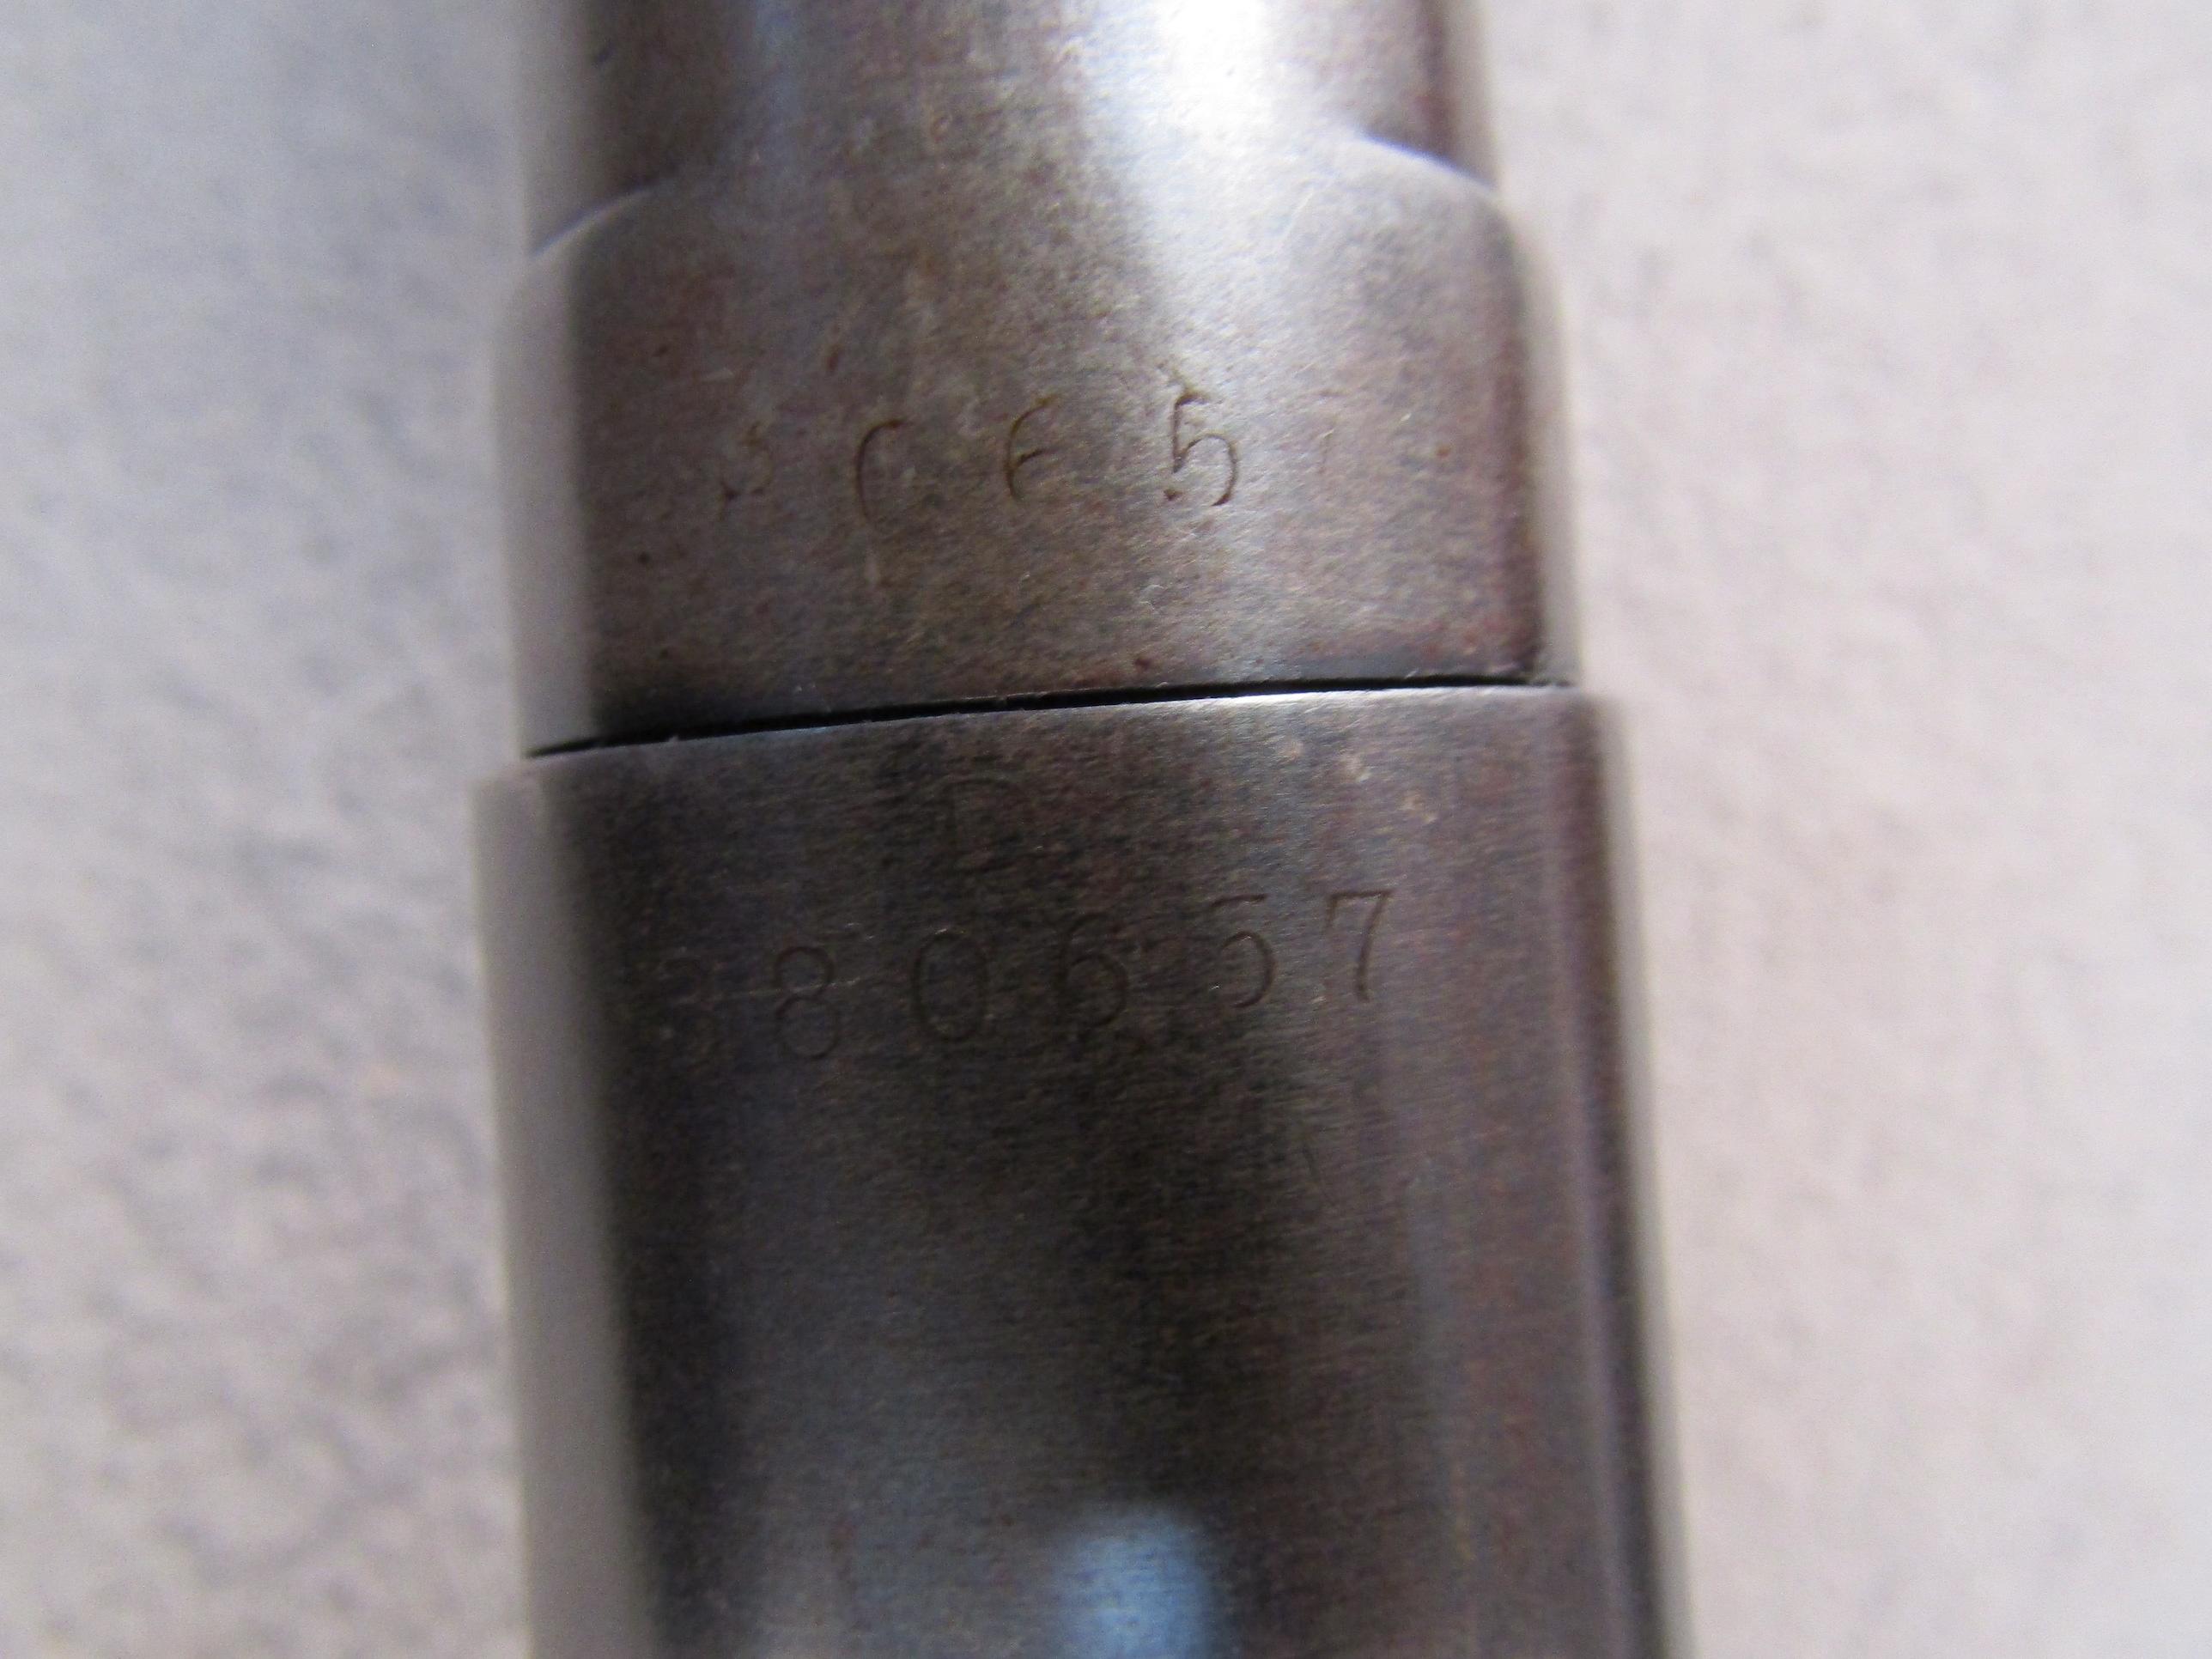 WINCHESTER Model 1897, Pump-Action Shotgun, 12g, S#380657